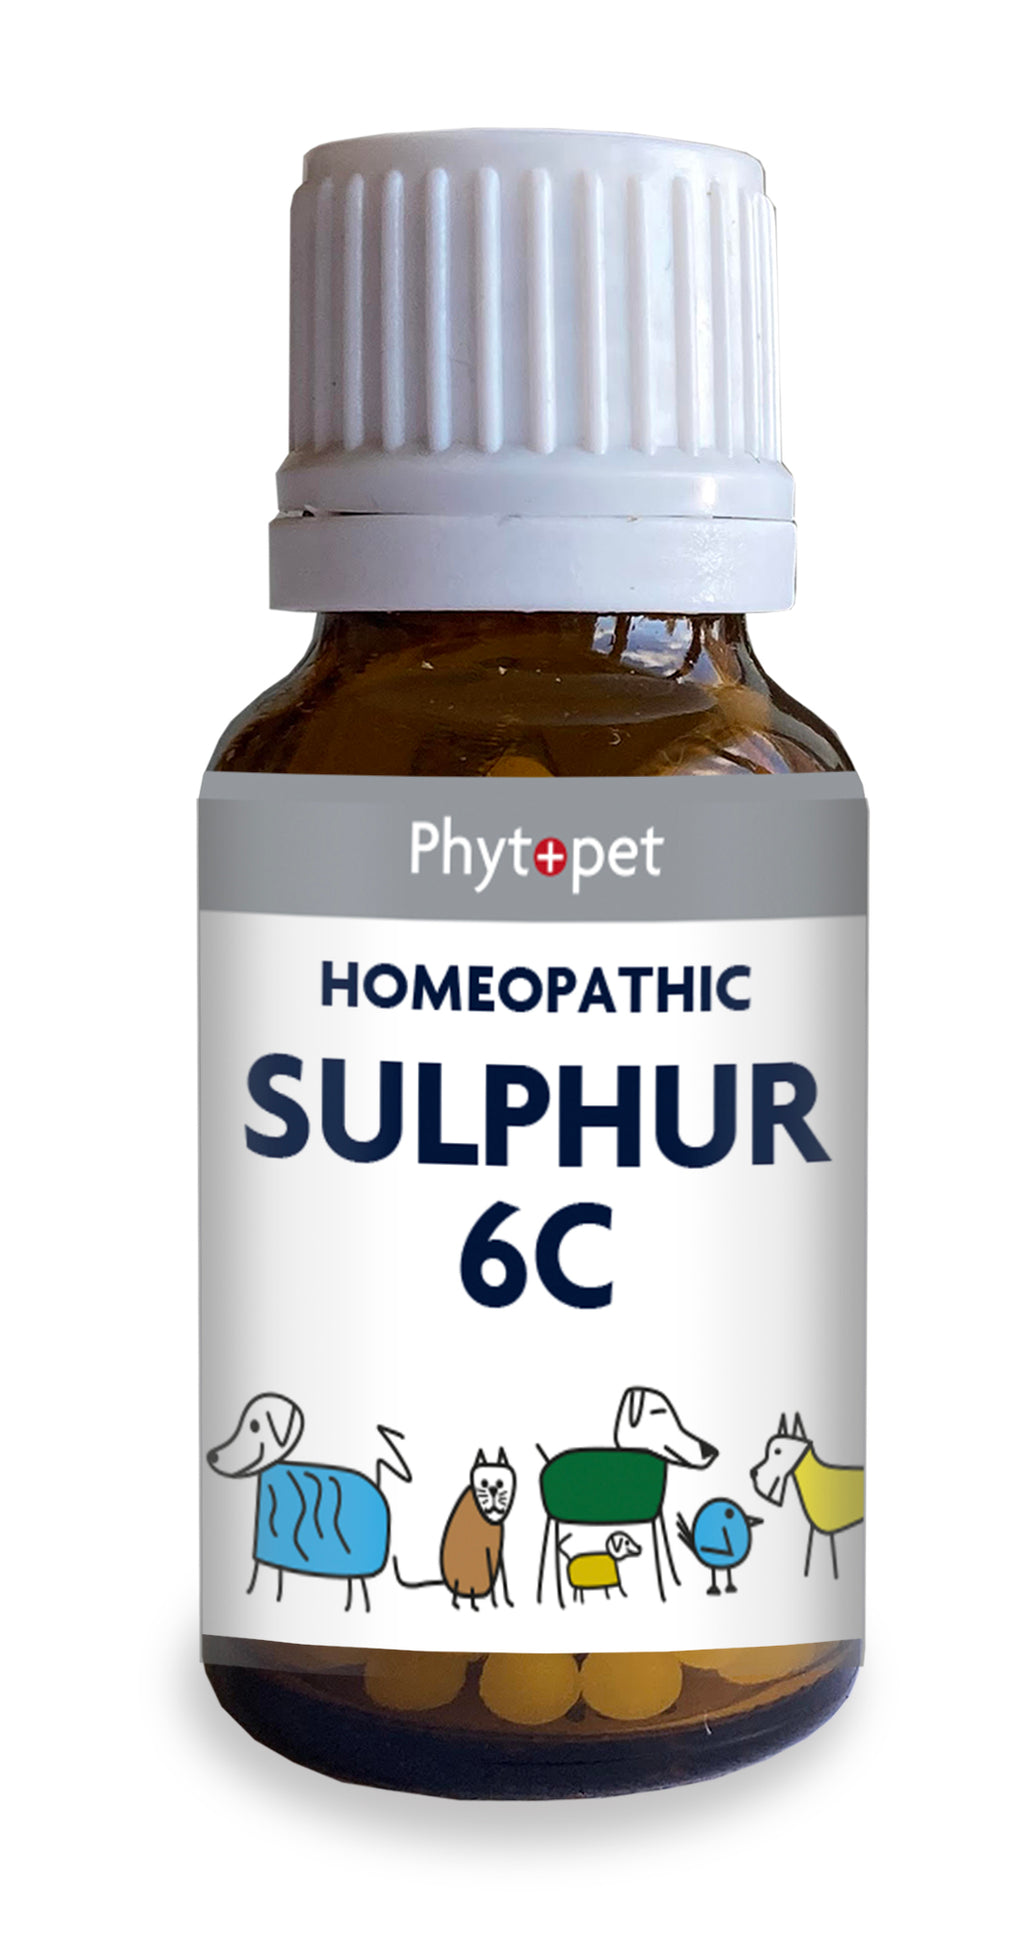 Homeopathic Sulphur